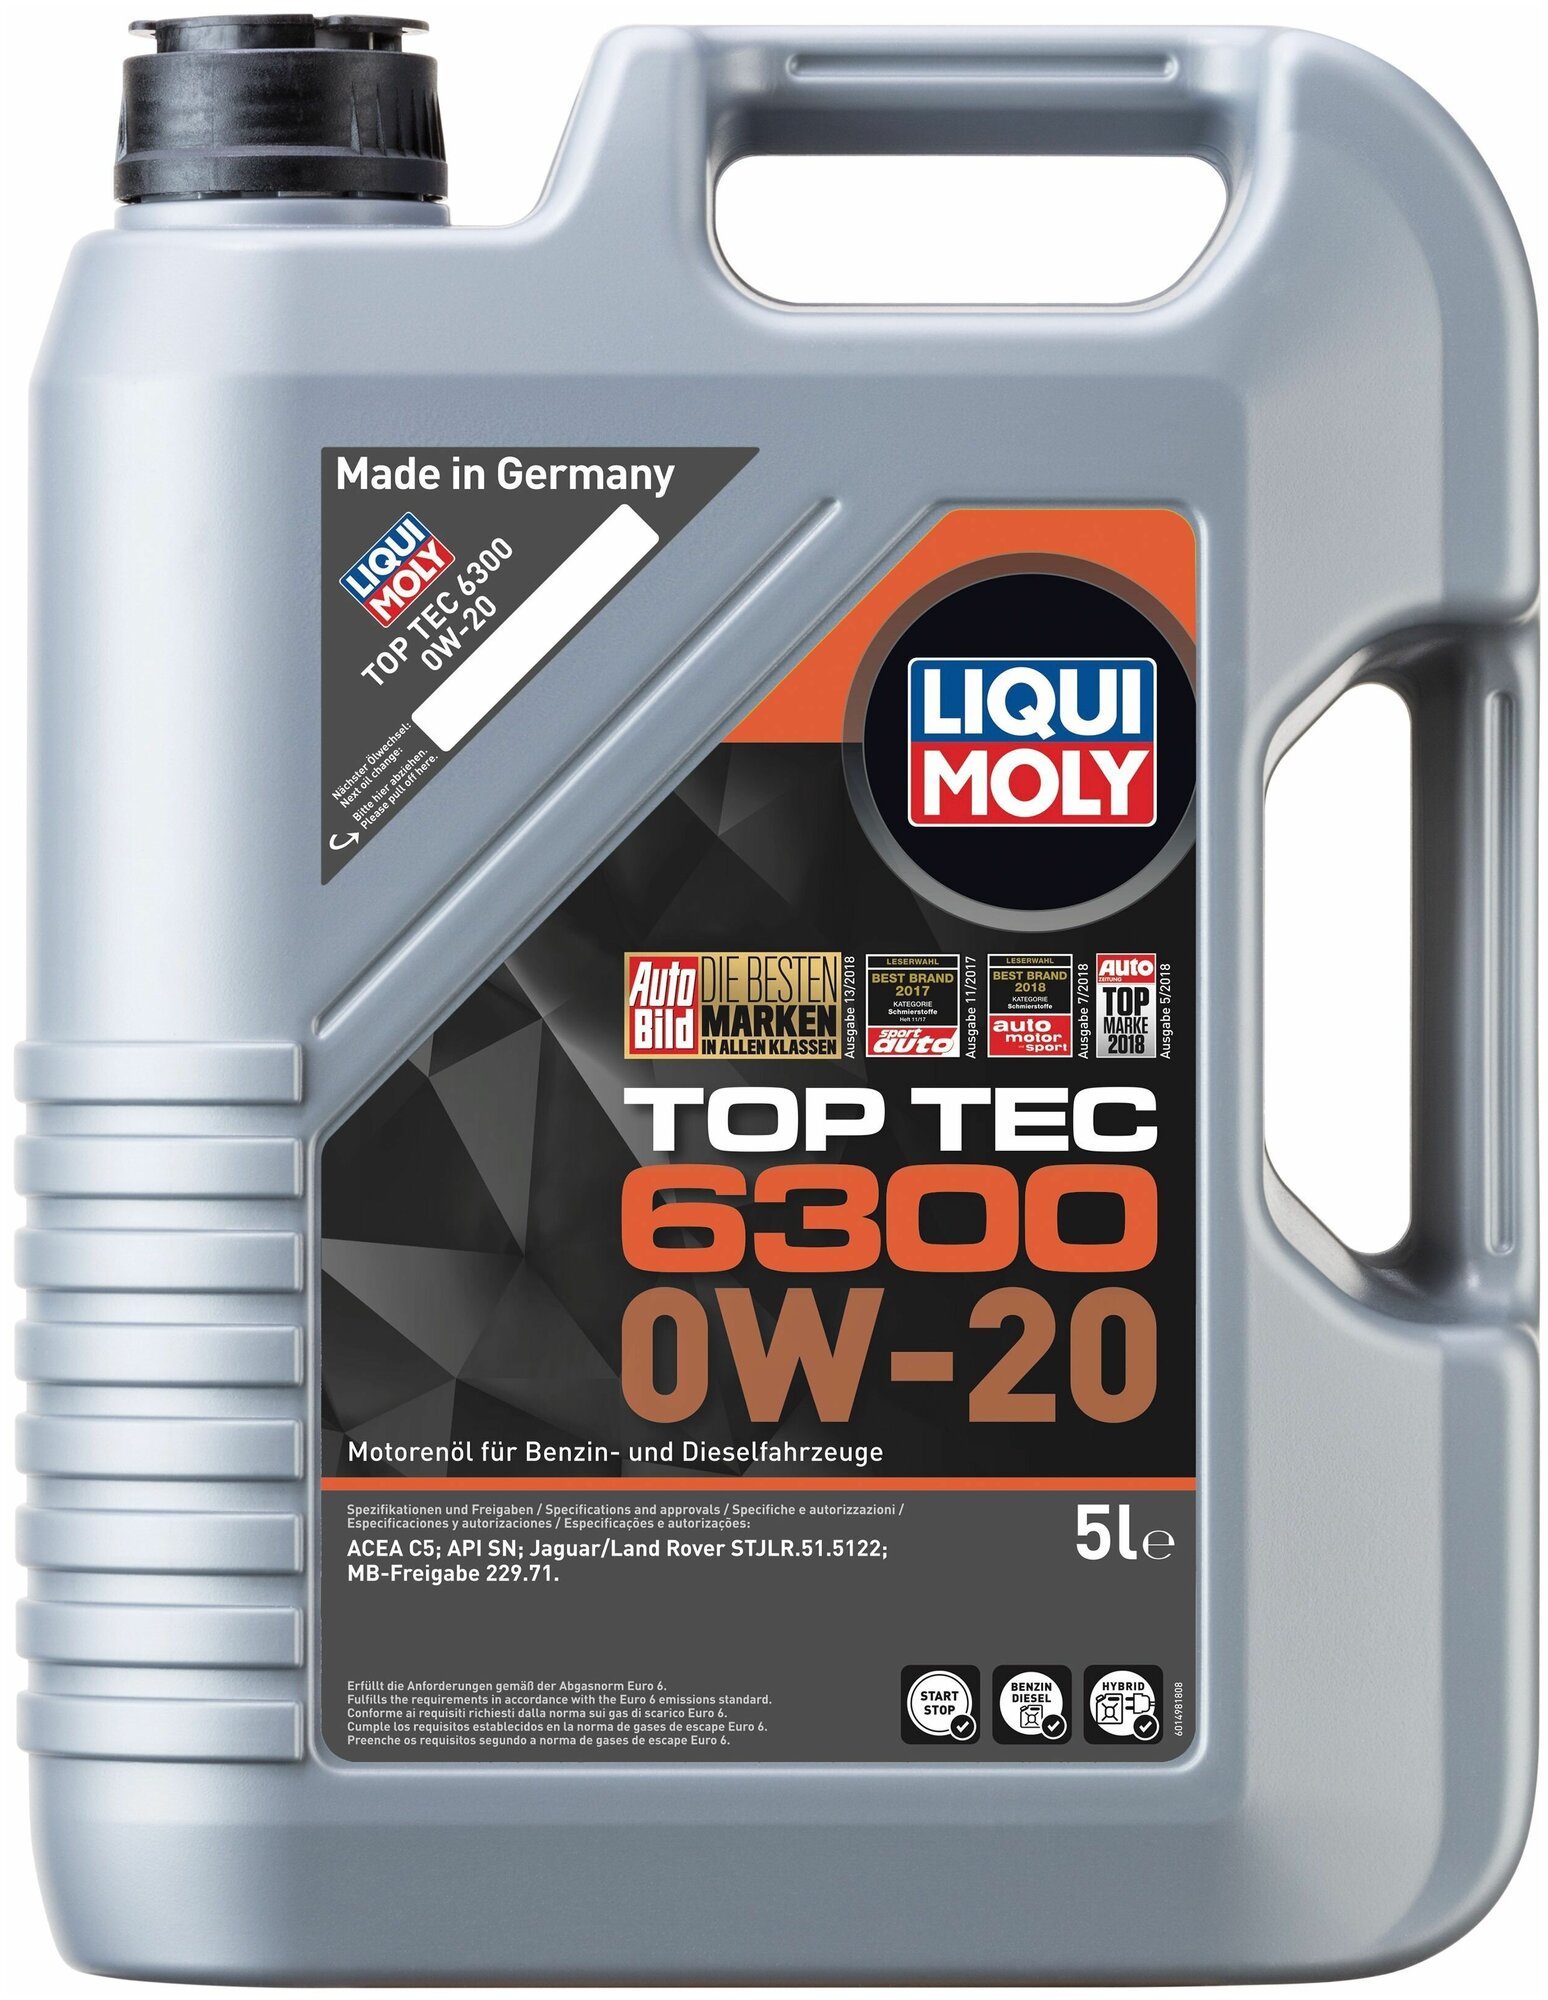 Синтетическое моторное масло LIQUI MOLY Top Tec 6300 0W-20, 5 л, 1 шт.